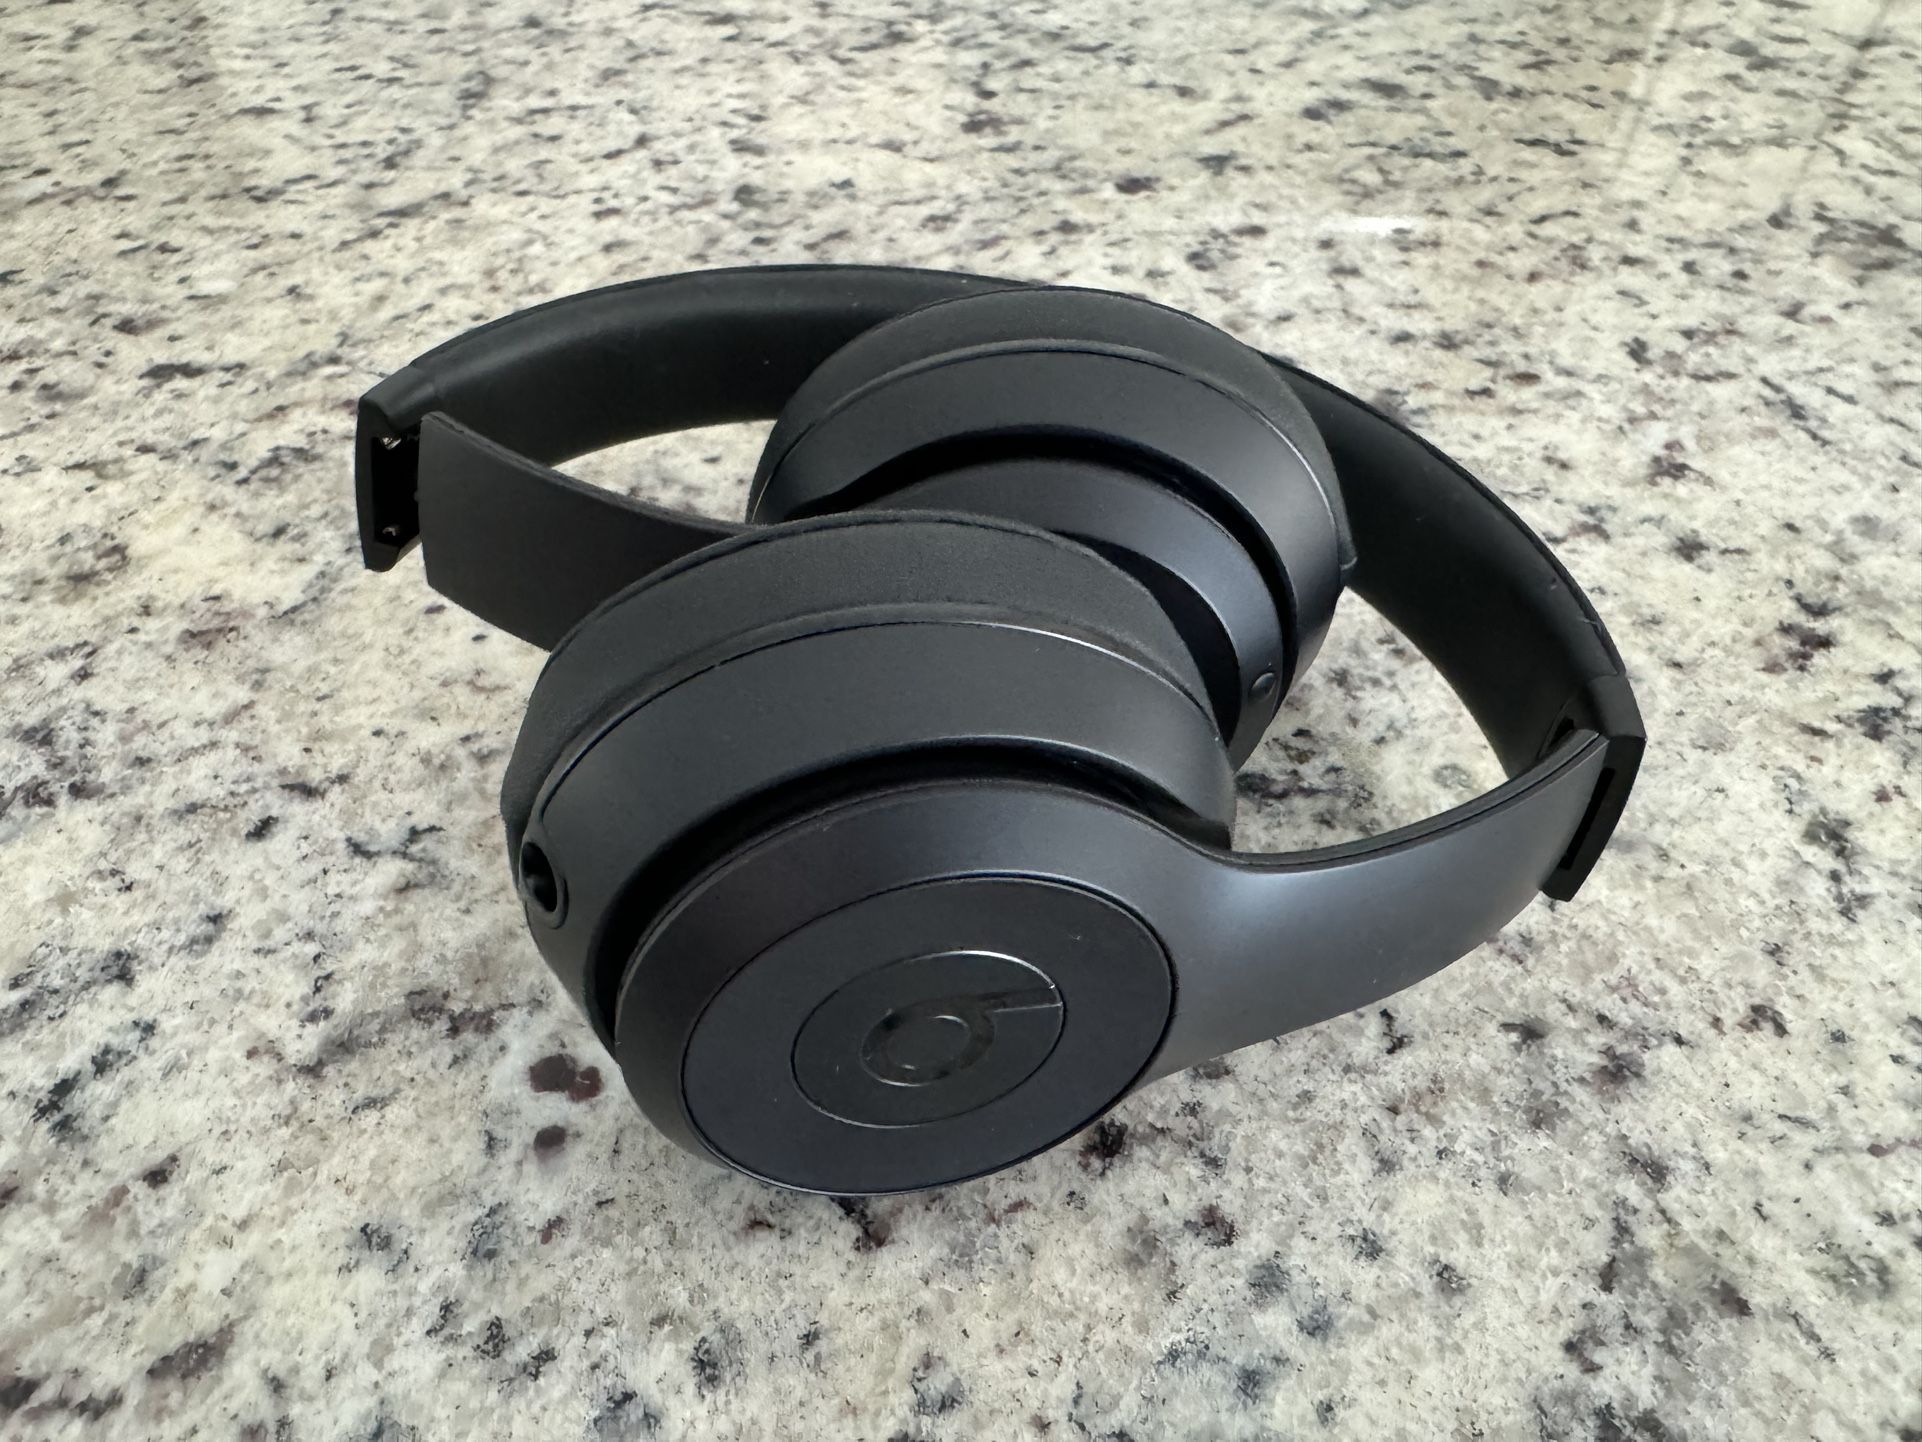 Beats Solo 3 Bluetooth Wireless All-Day On-Ear Headphones